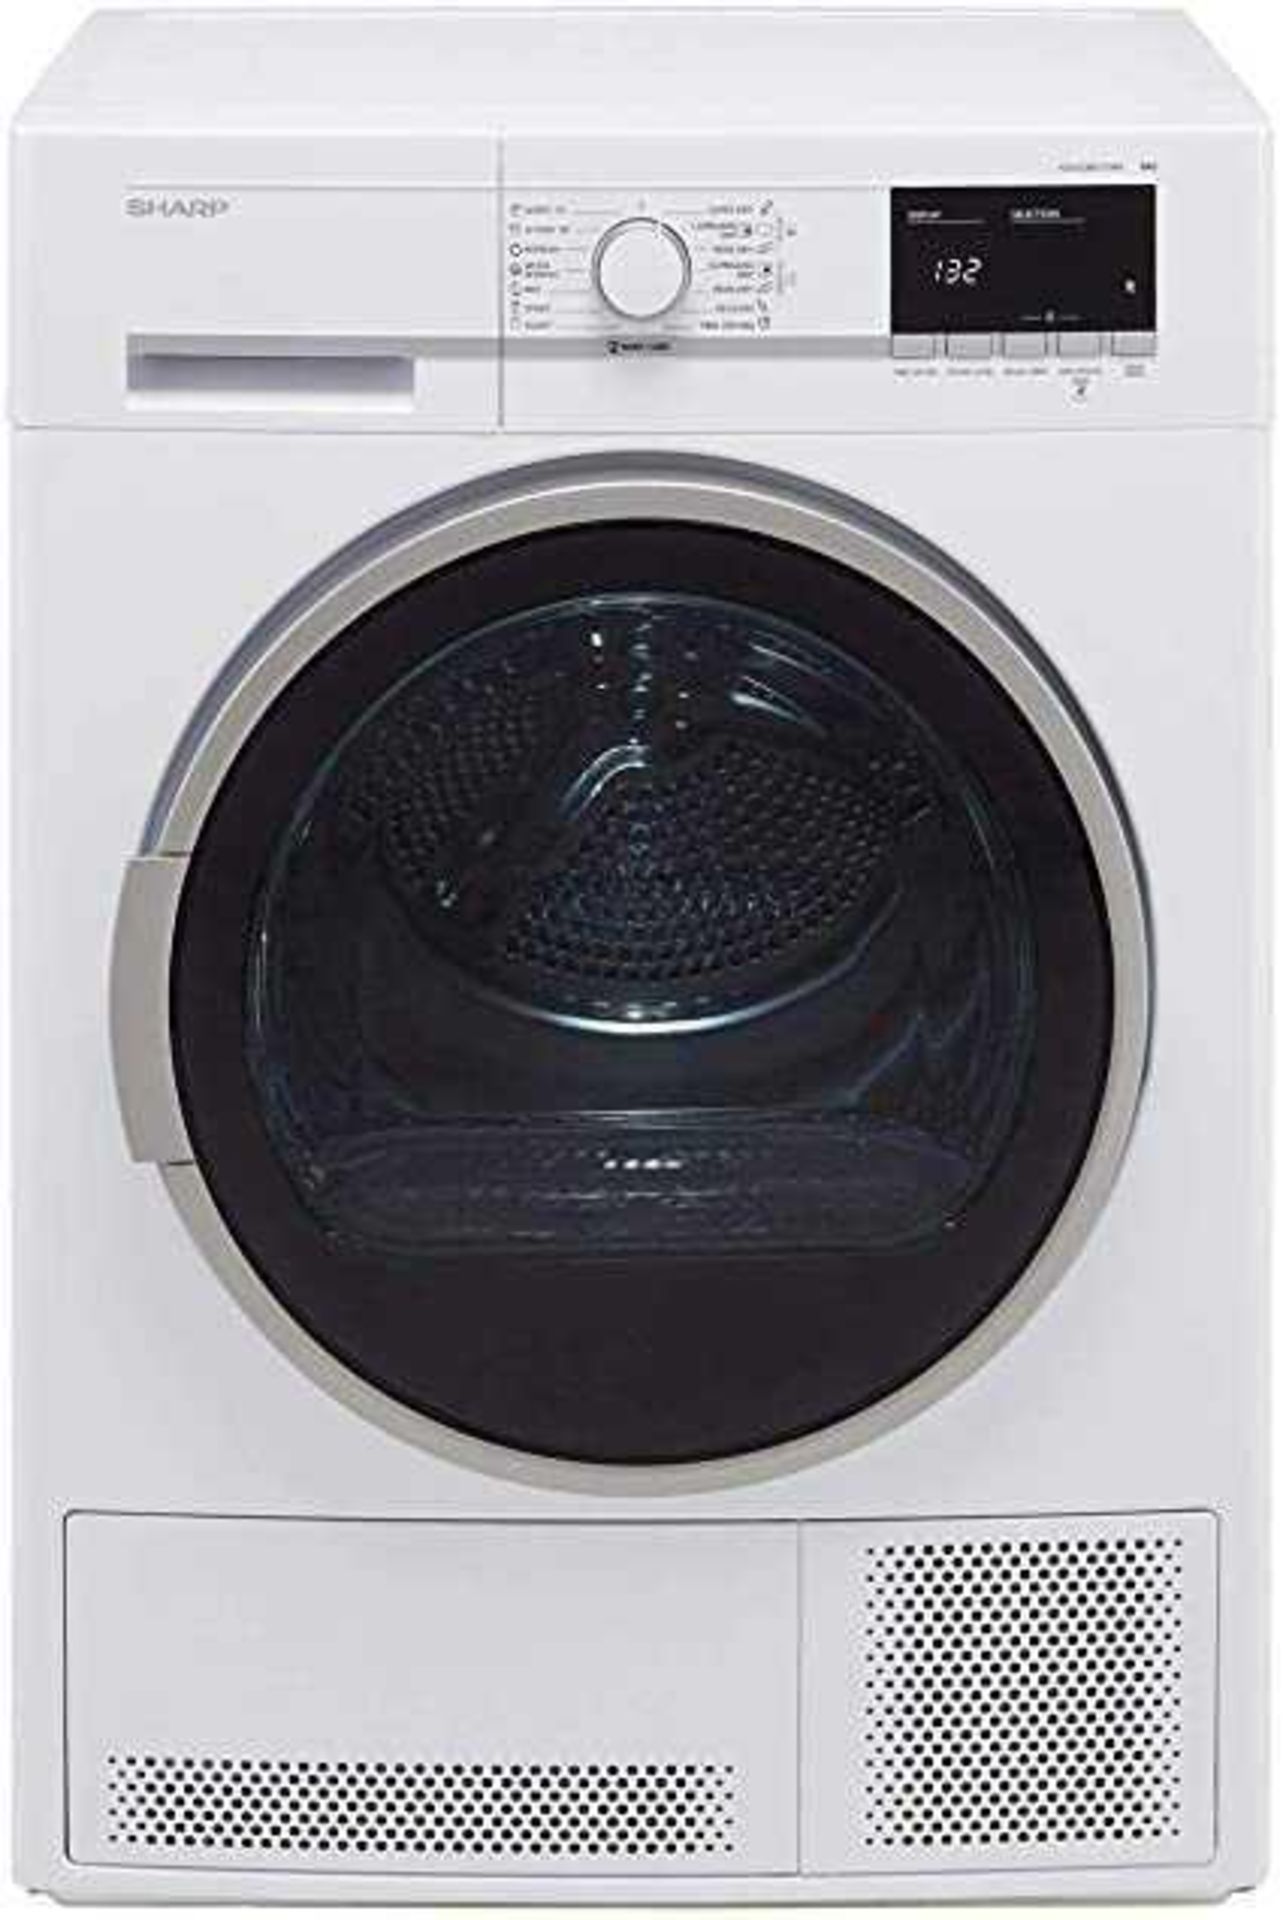 (Sp) RRP £300 Lot To Contain 1 Sharp Kd-Gcb8S7Gw9-En 8Kg Condenser Tumble Dryer